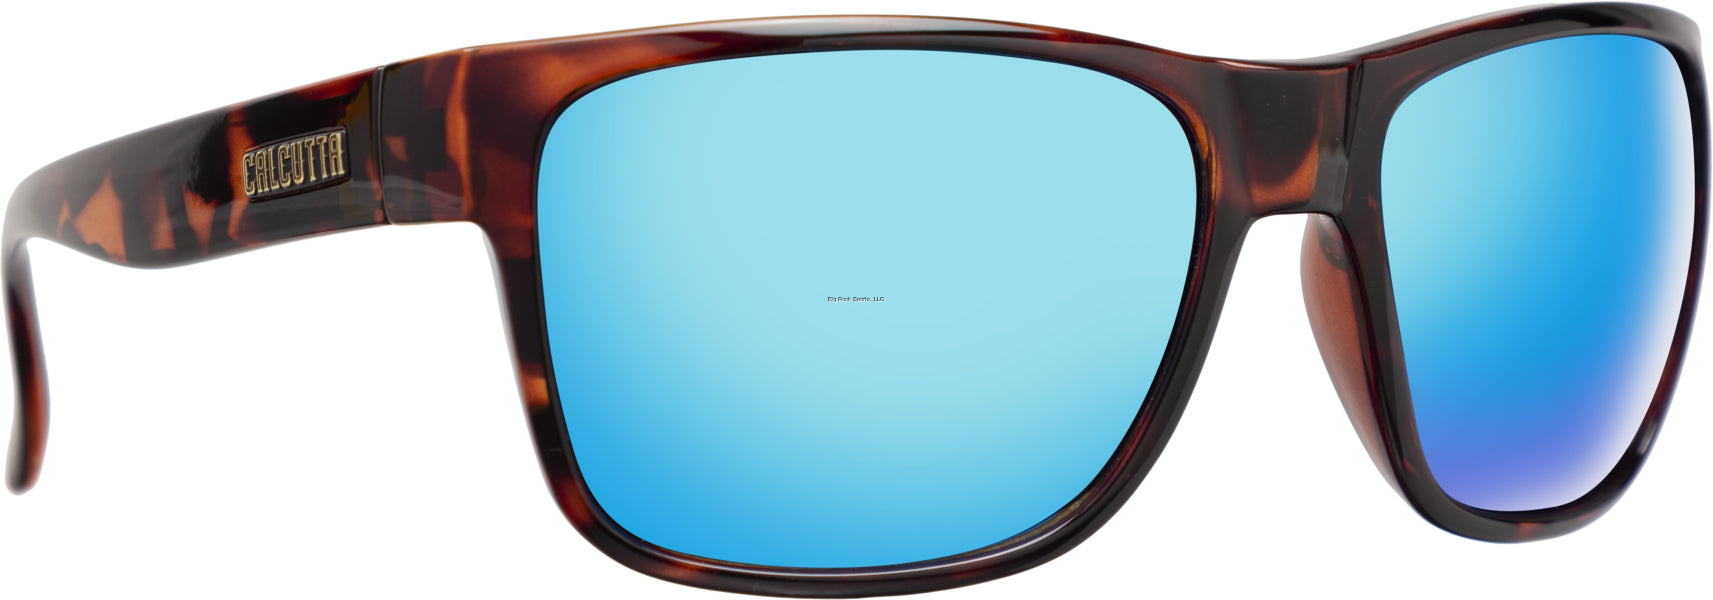 Calcutta Tybee Discover Series Sunglasses